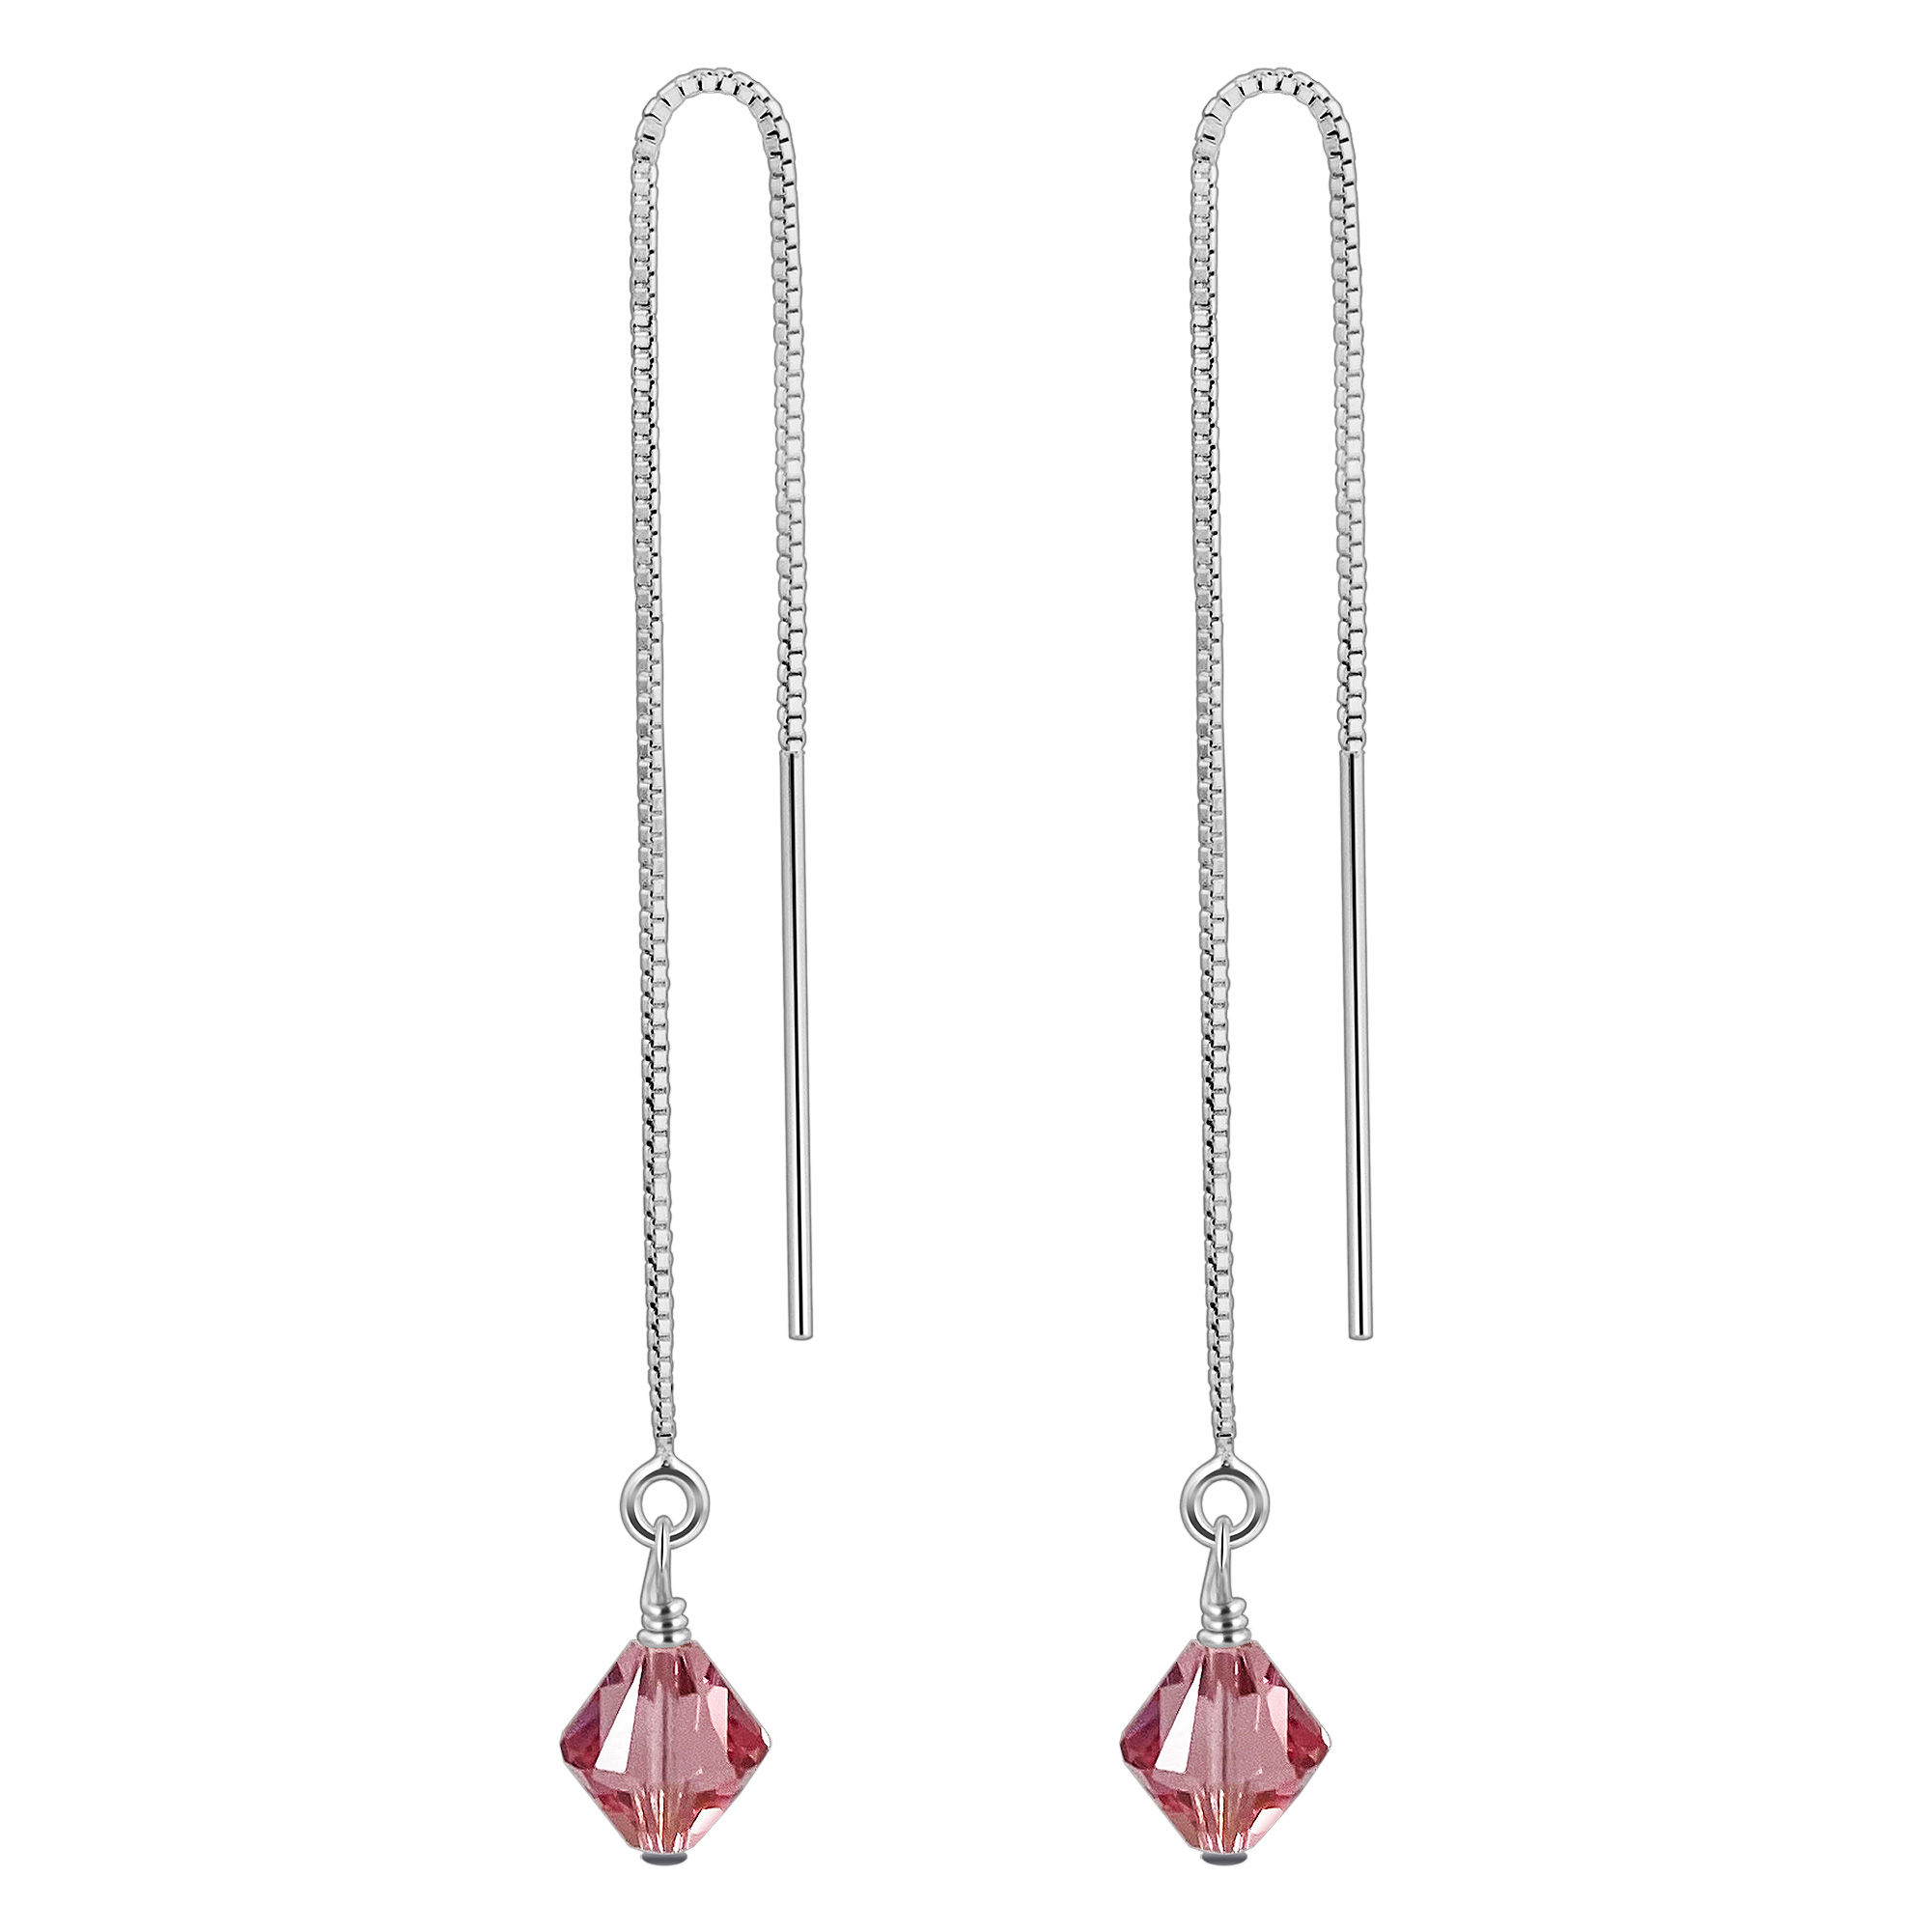 Gem Avenue Stylish Pink Genuine Swarovski Crystals Sterling Silver 2" Long Threader Ear Wire String Earrings